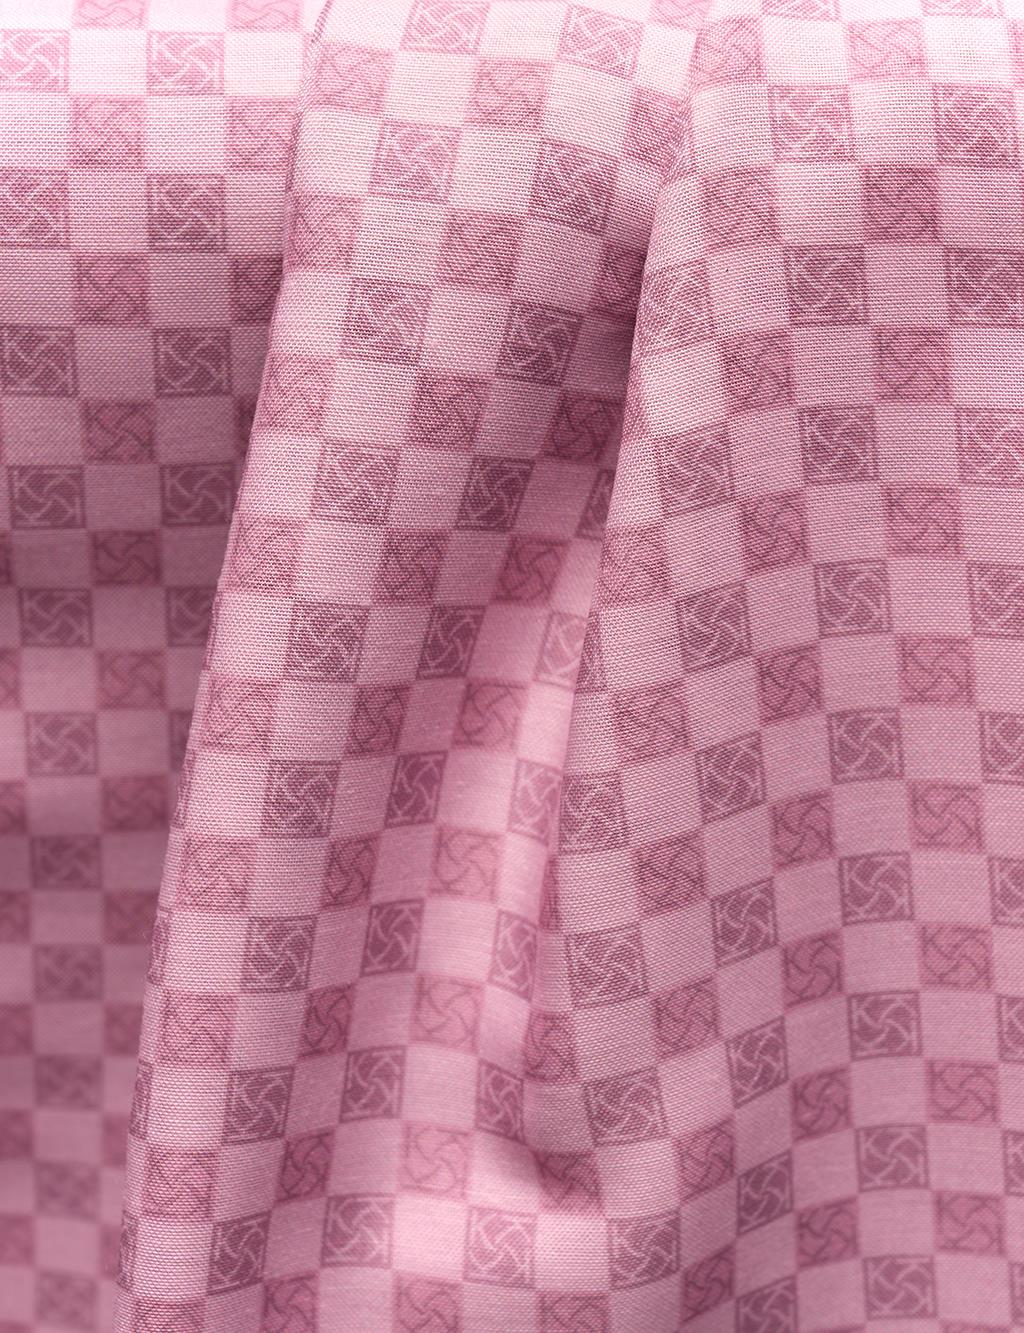 Checkered Monogram Patterned Shawl Pink